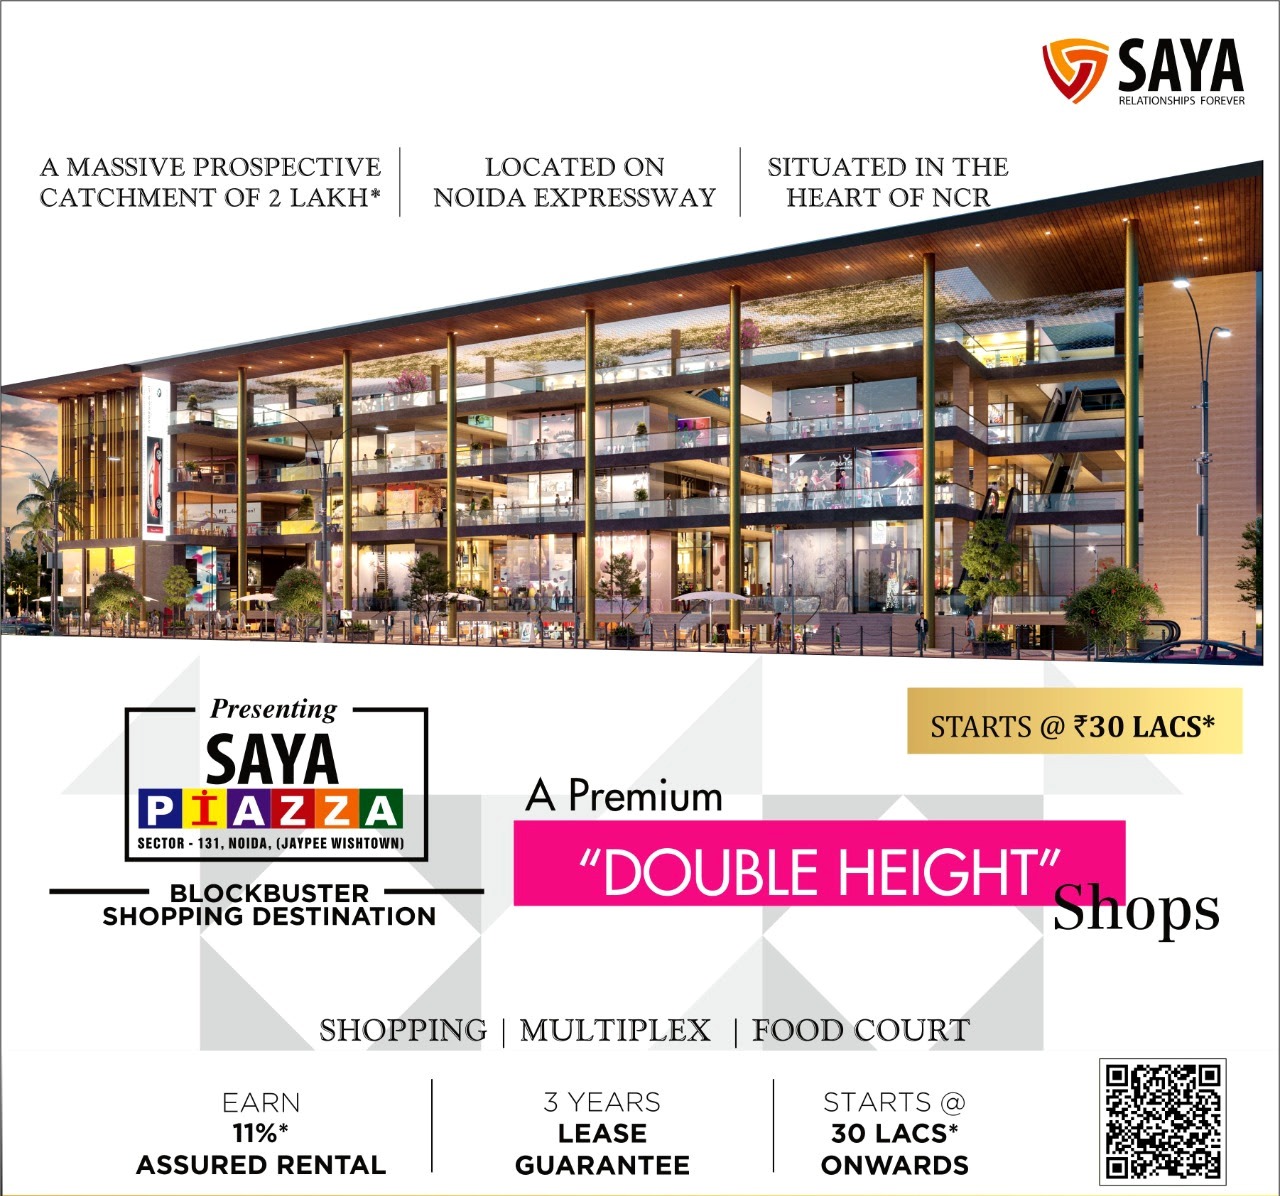 Earn 11% assured rental at Saya Piazza, Sector 131, Noida Update